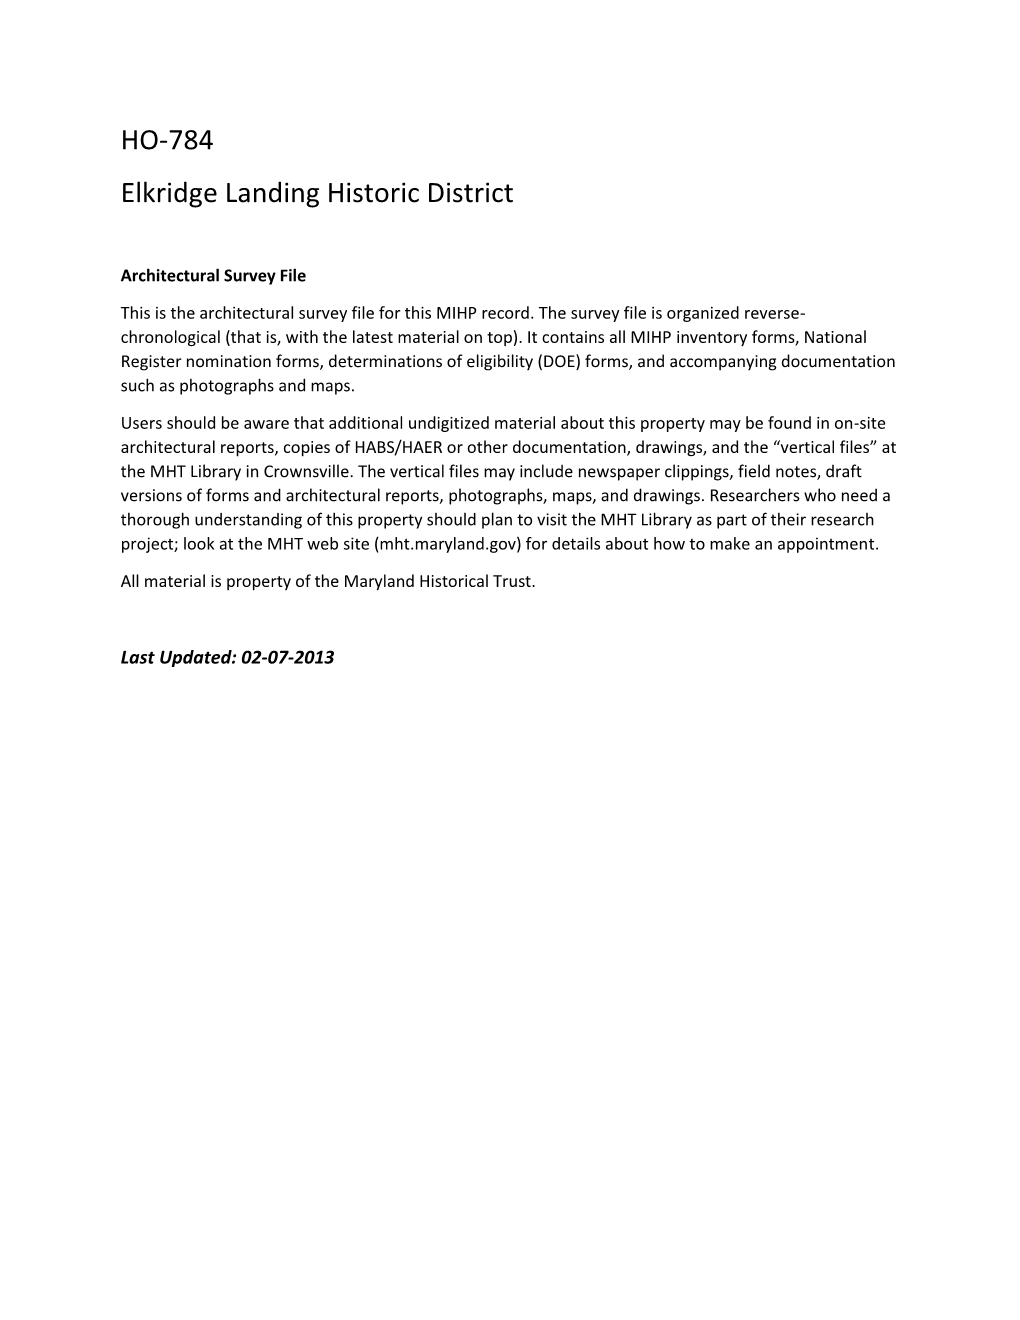 HO-784 Elkridge Landing Historic District